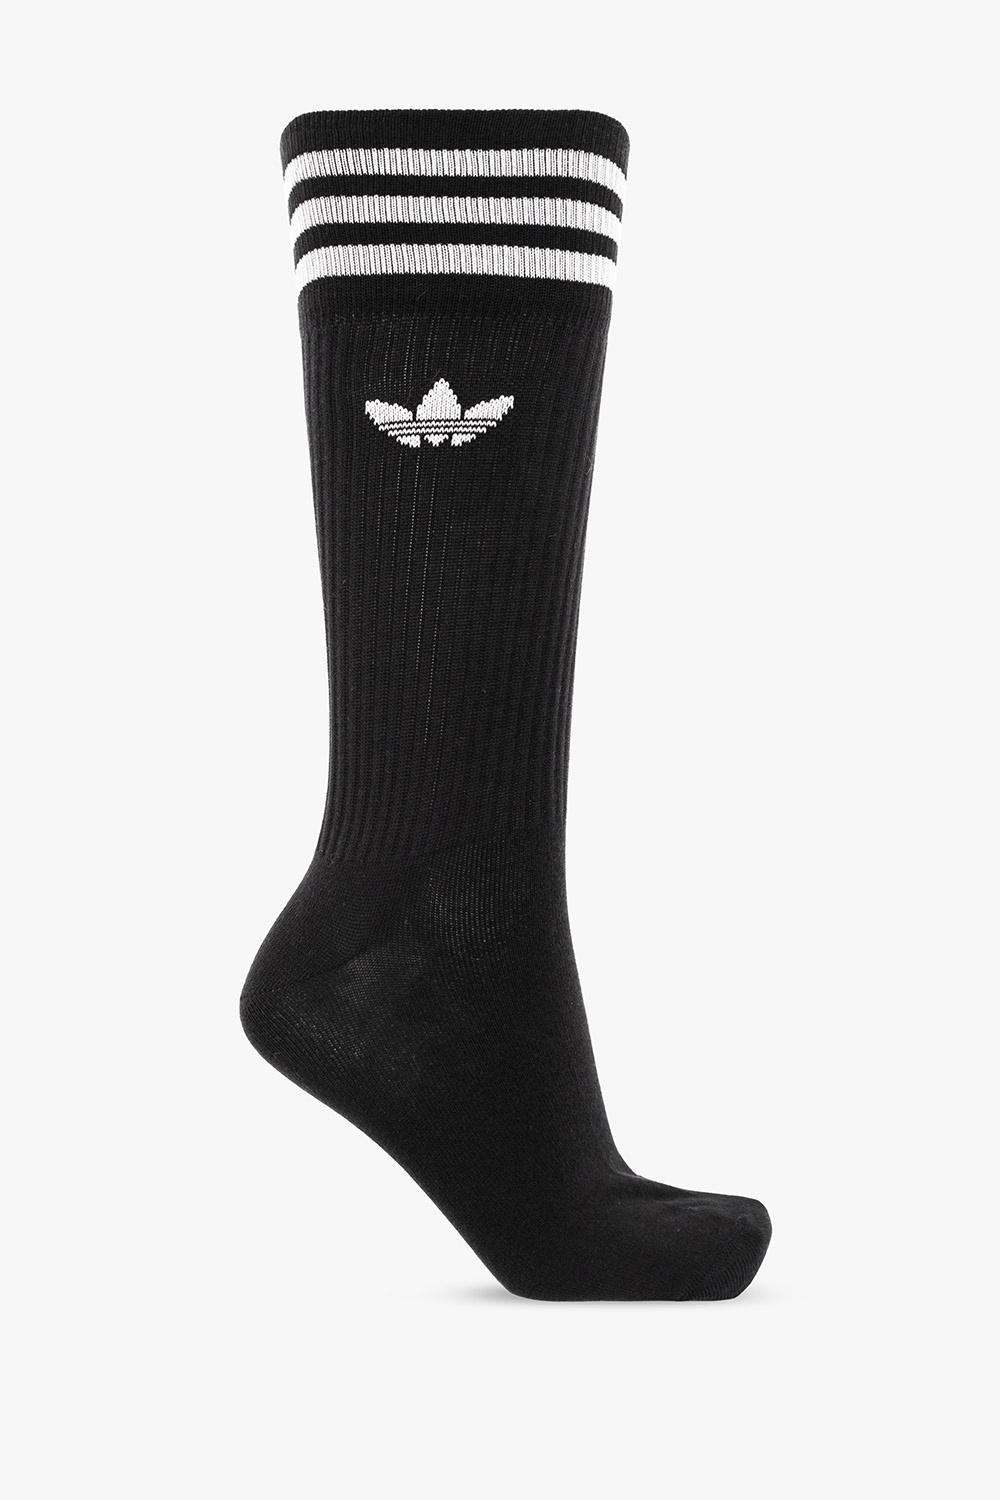 ADIDAS Originals Socks 3-pack